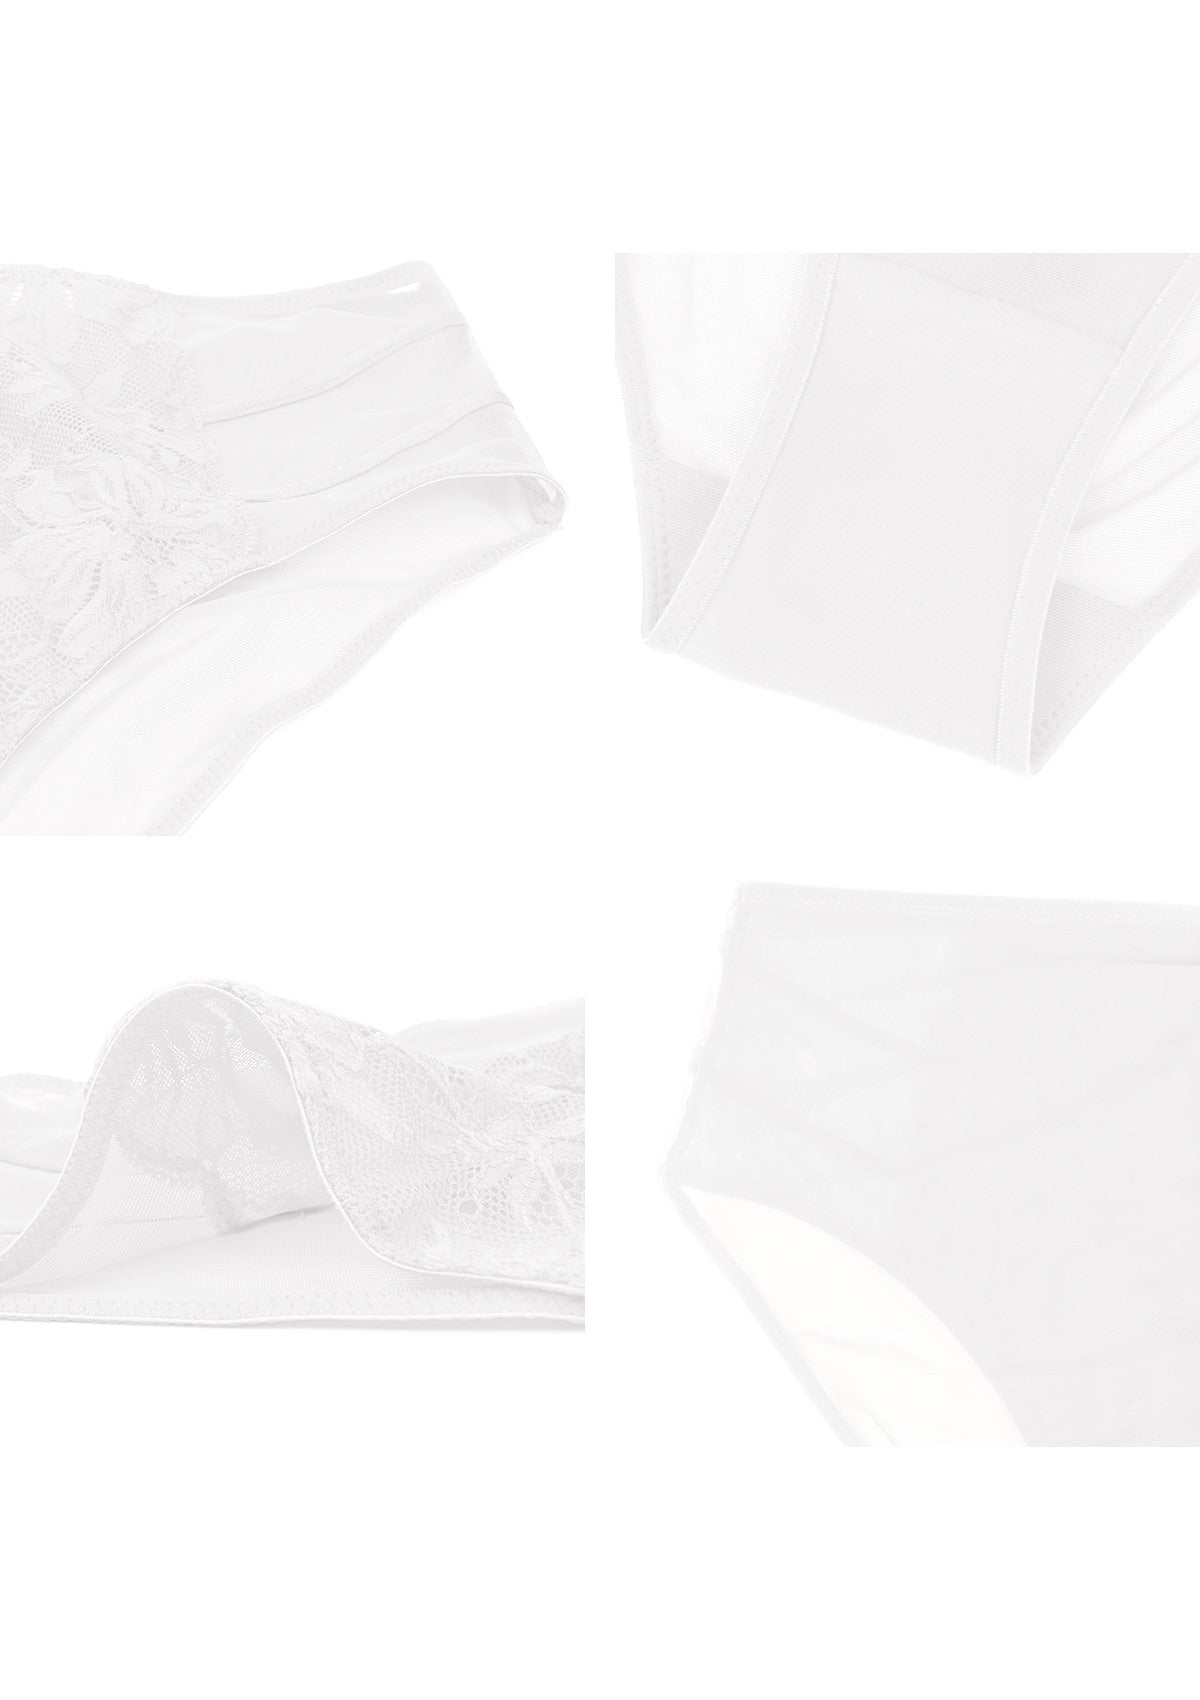 HSIA Mid-Rise Elegant Feminine Sheer Lace Mesh Comfortable Underwear. - XXL / Bikini / White